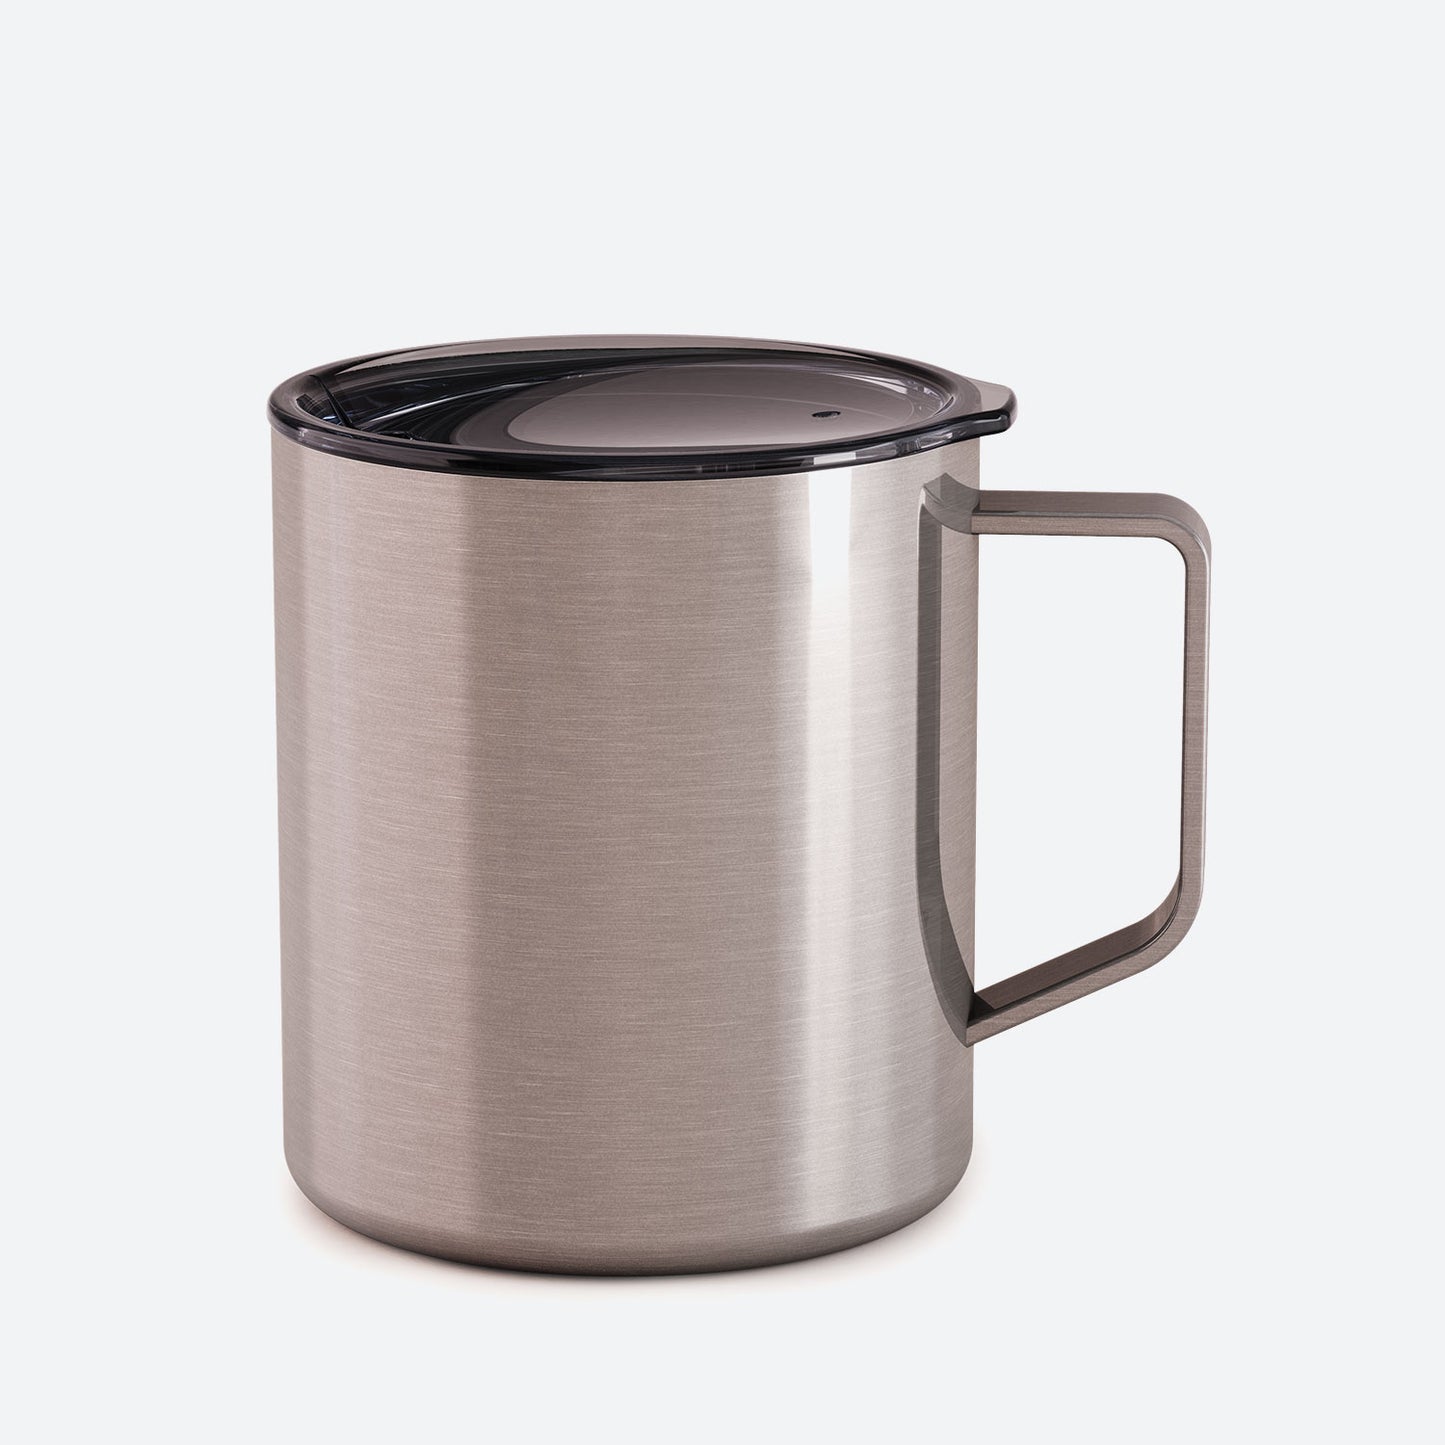 Zara 14 oz Stainless Steel/Polypropylene Mug